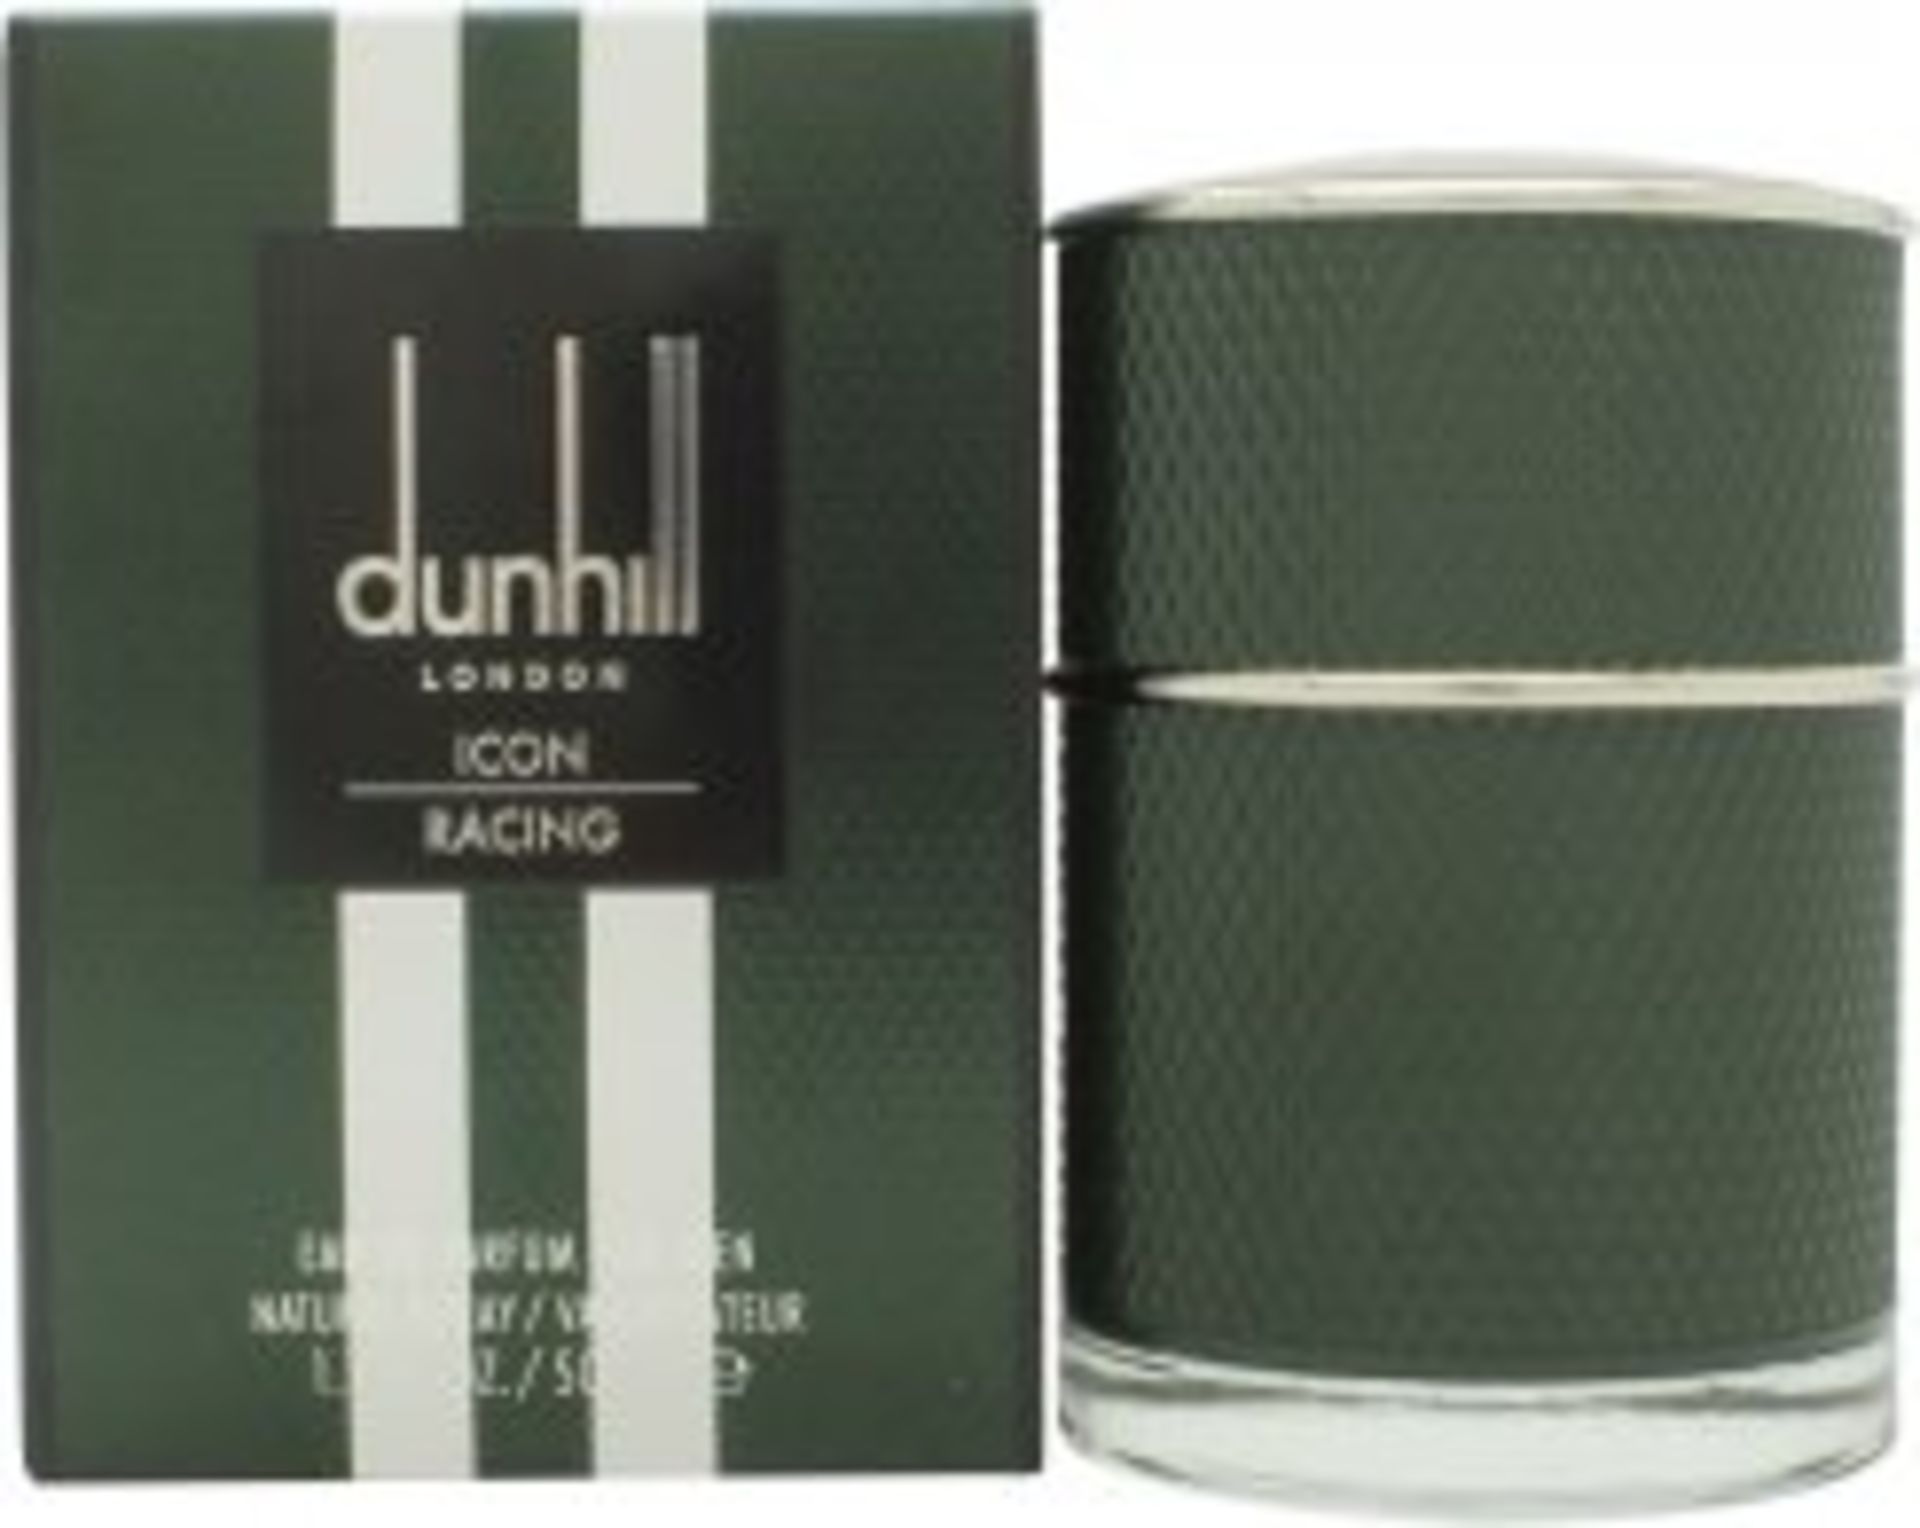 Dunhill London ICON RACING 1.7 oz / 50 ml Eau De Parfum EDP Spray Men, SEALED - Image 4 of 4